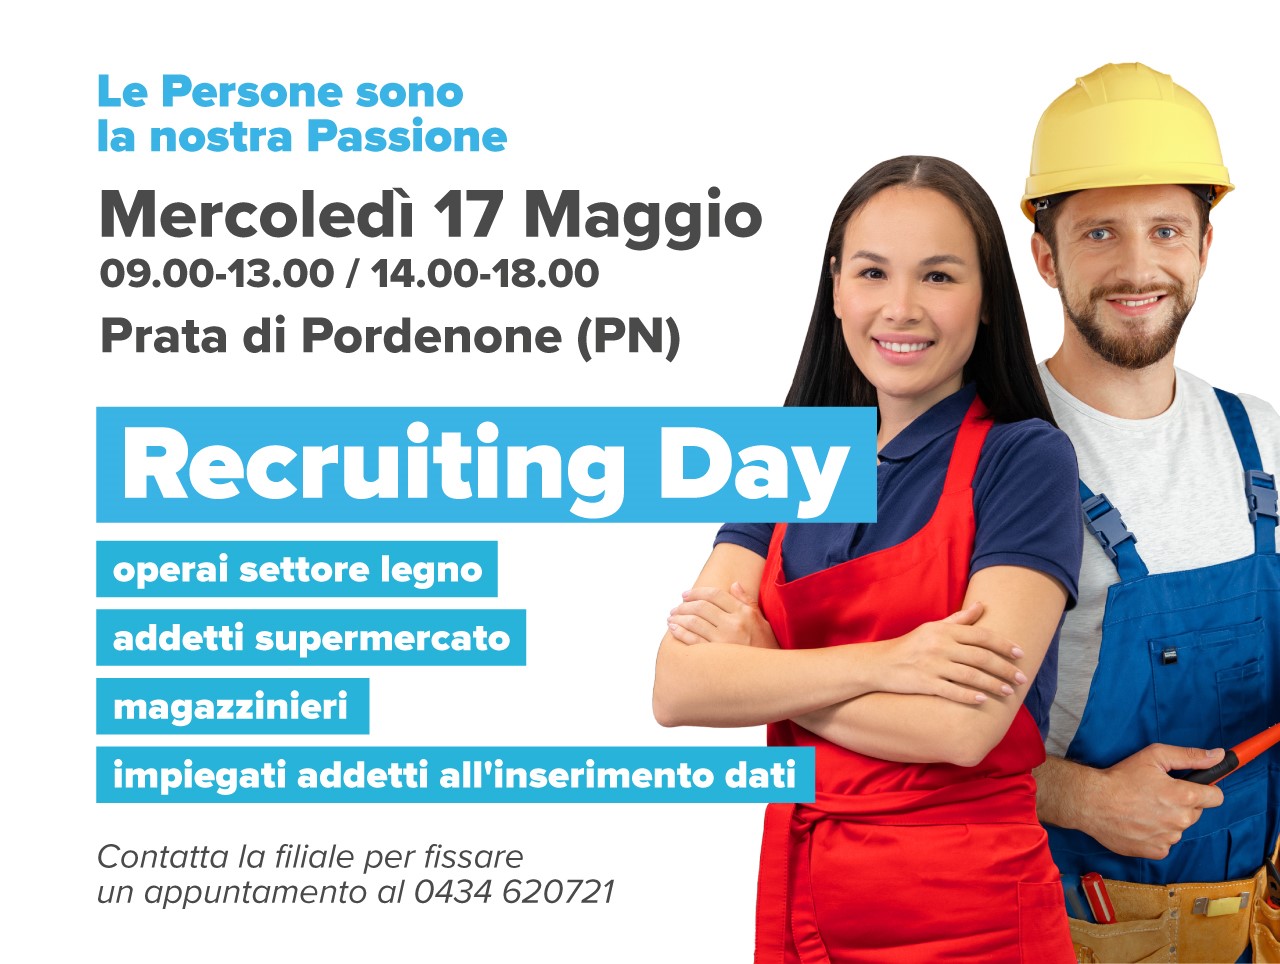 Recruiting Day - Prata di Pordenone (PN)